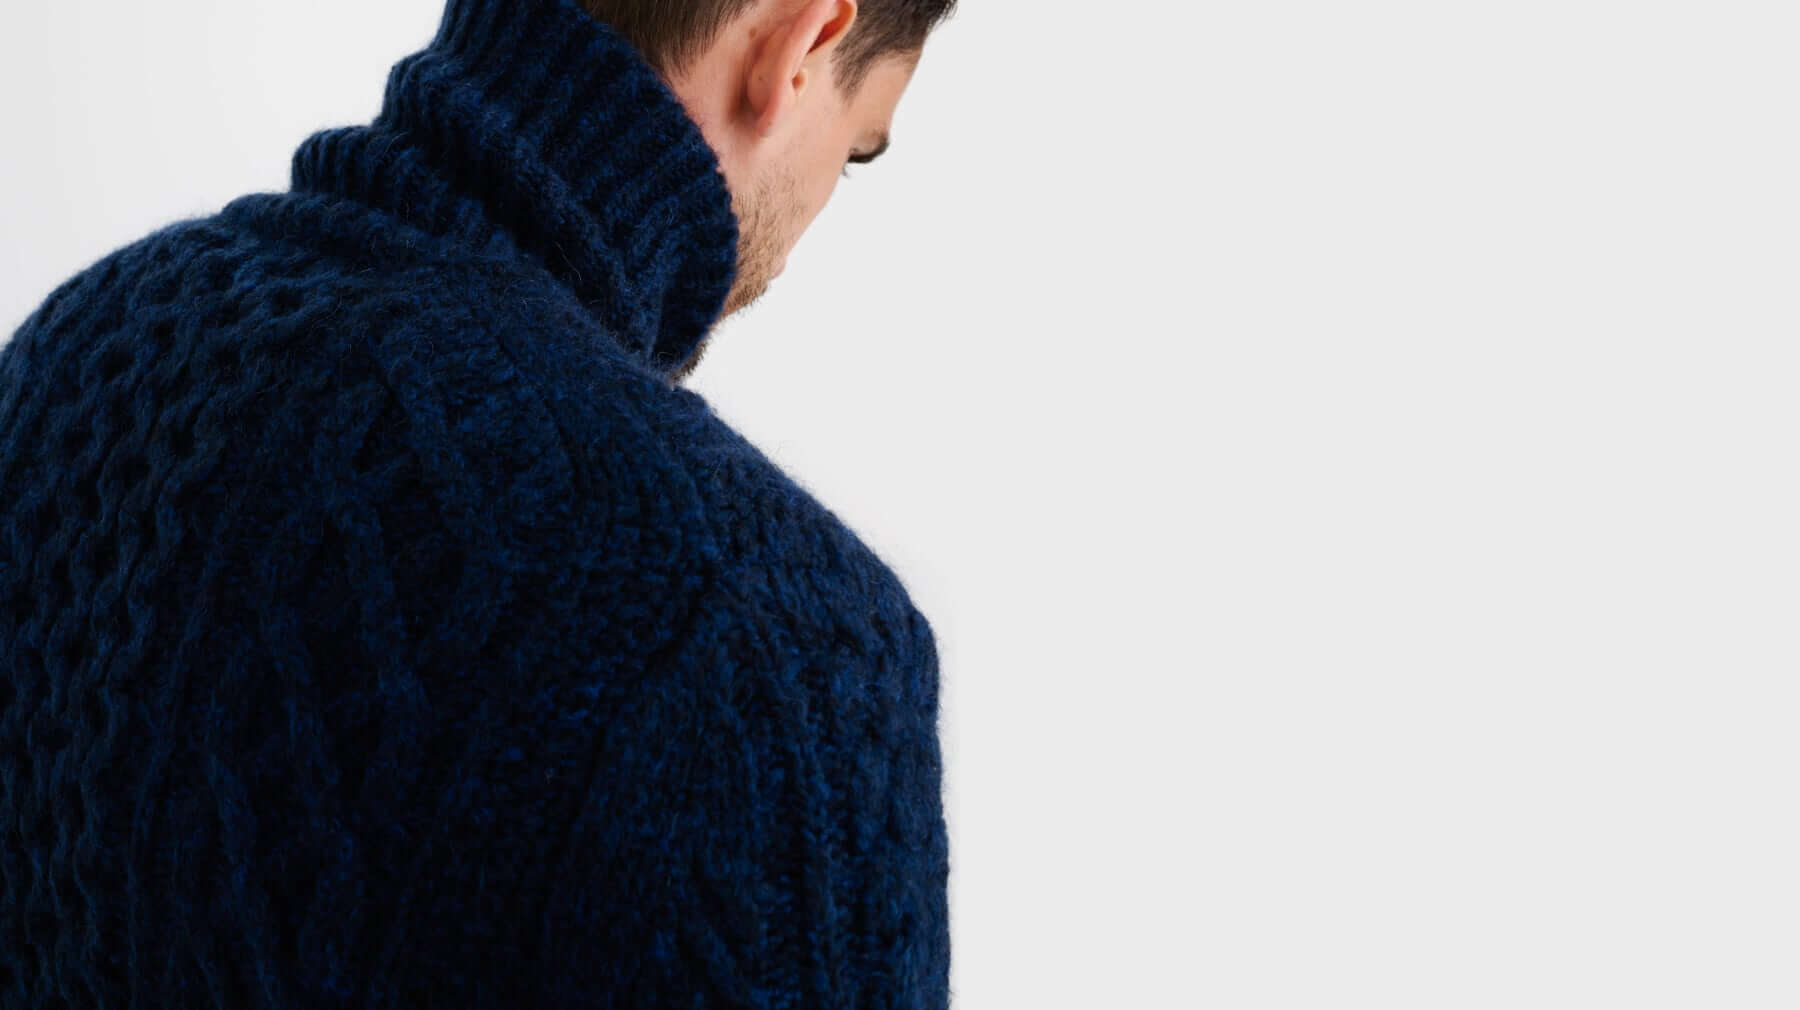 Best men's turtleneck sweaters in 2021